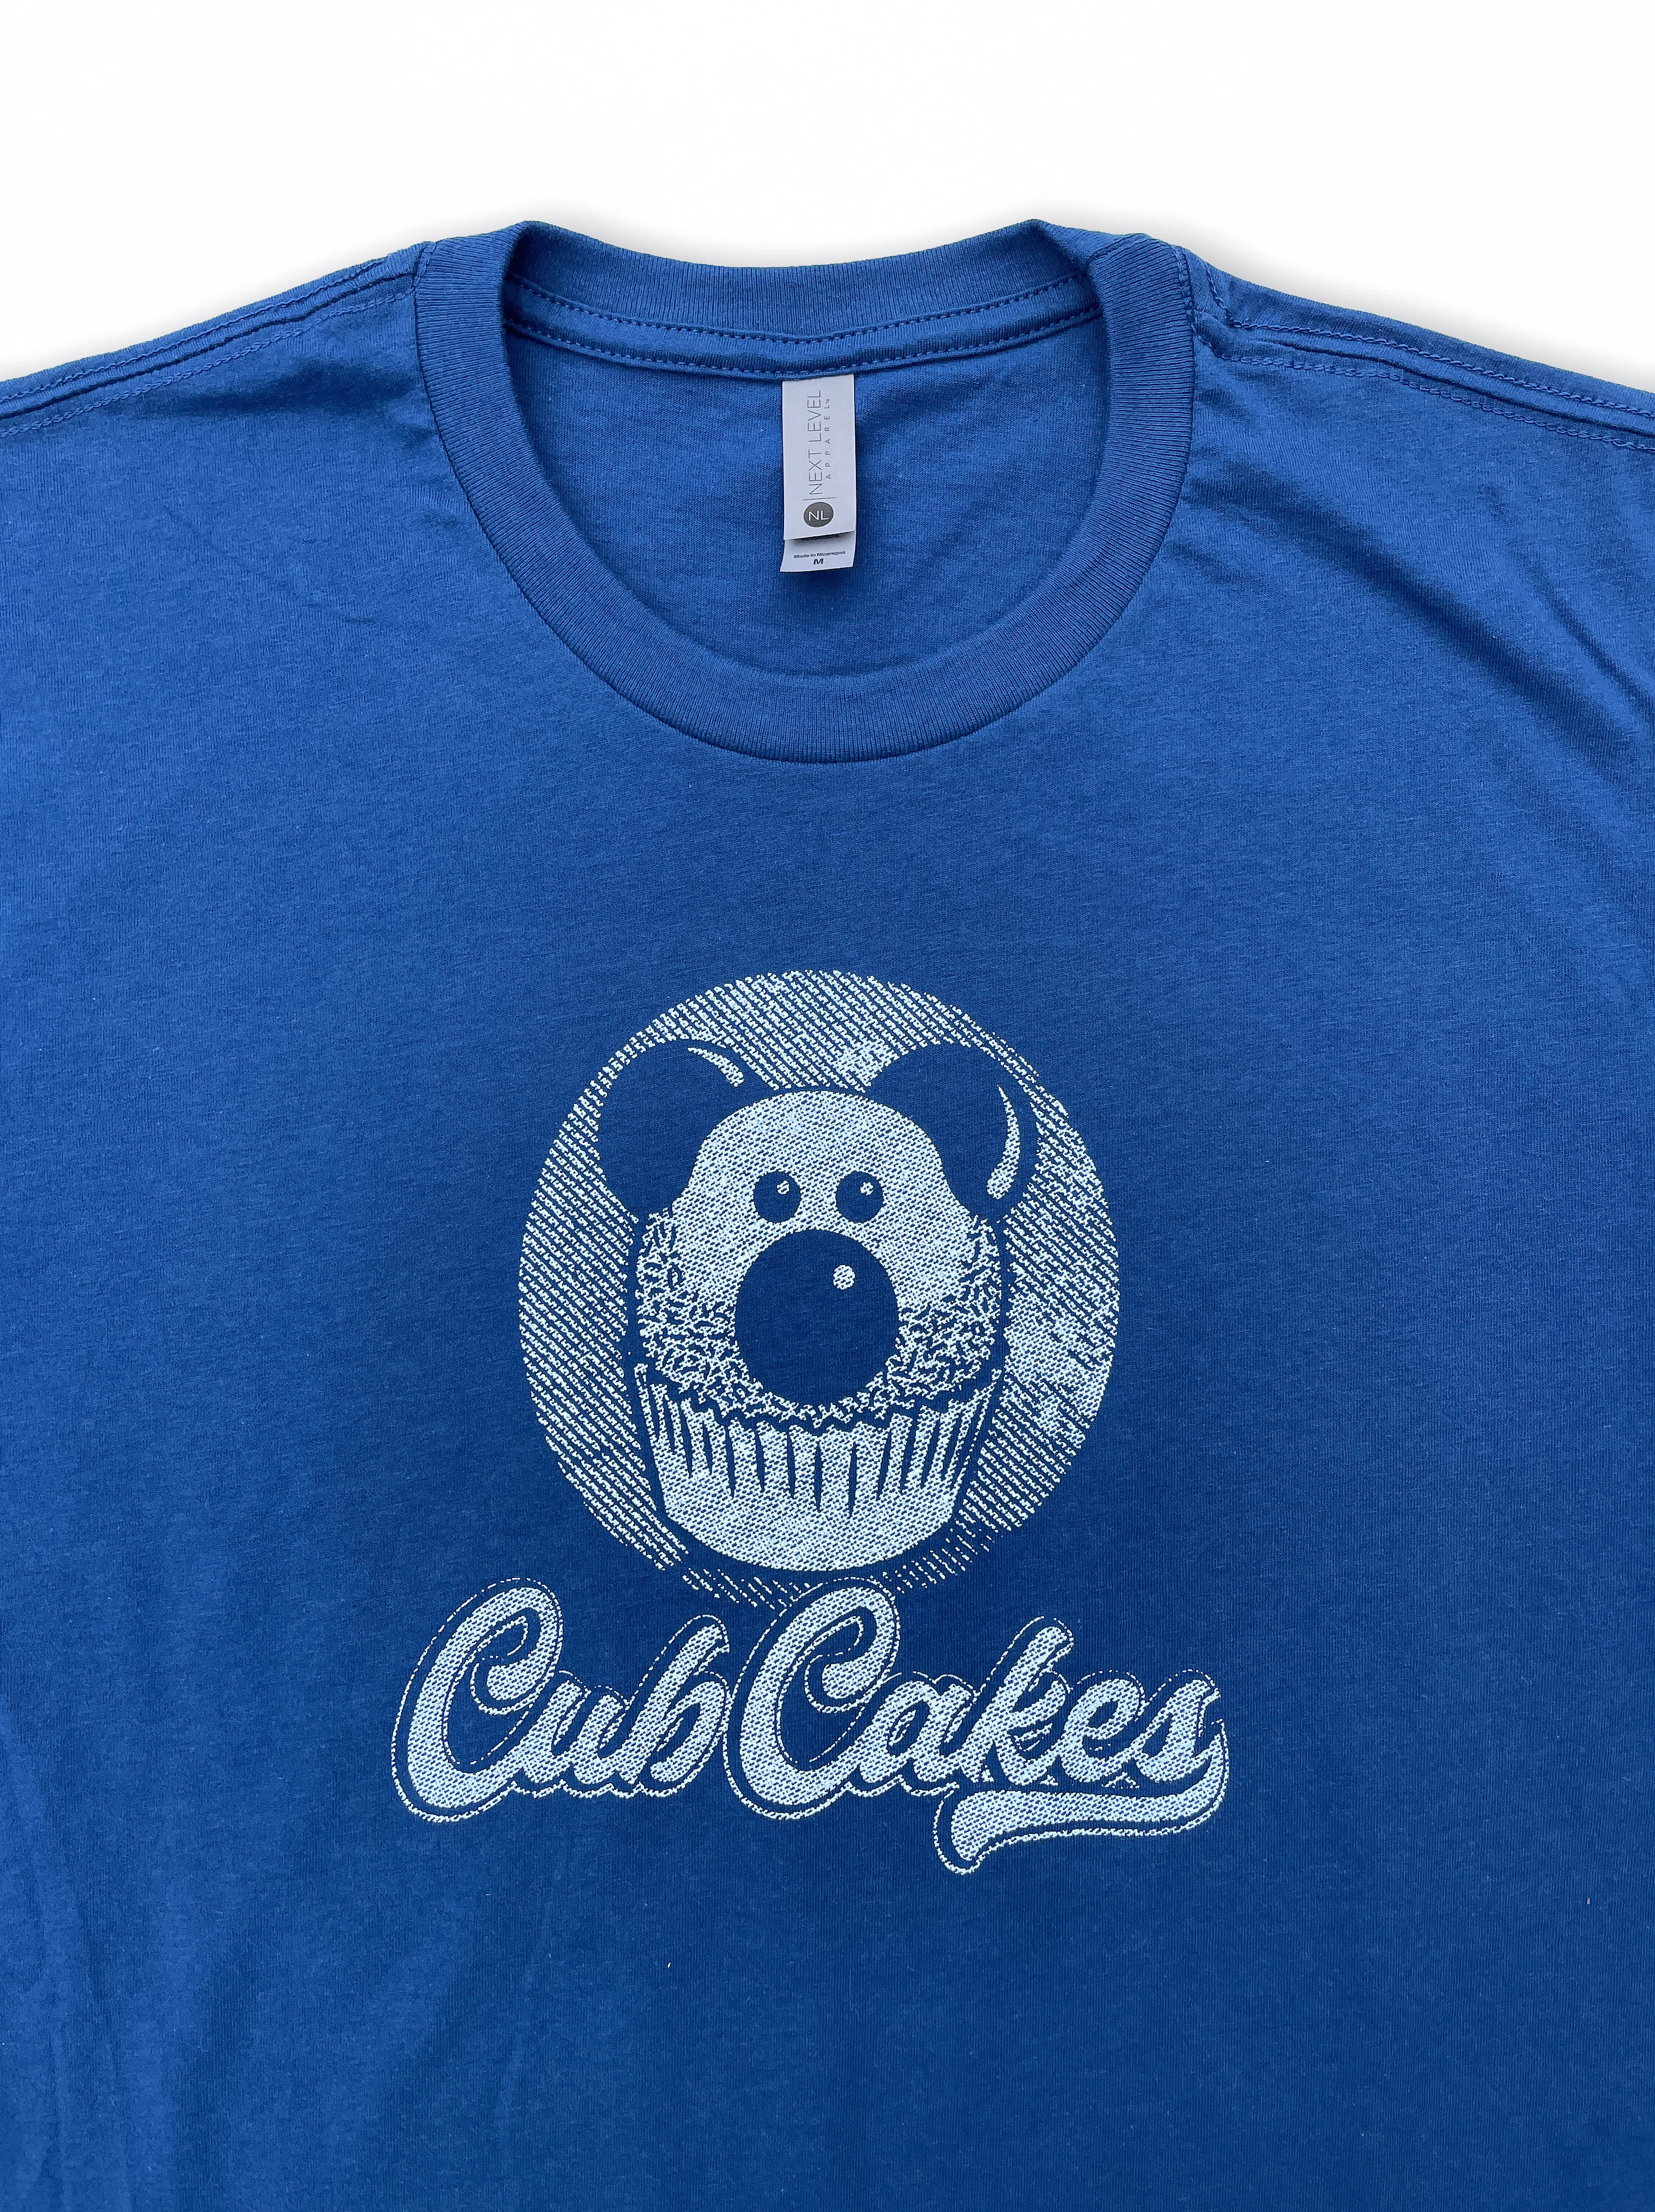 Cub Cake on Blue